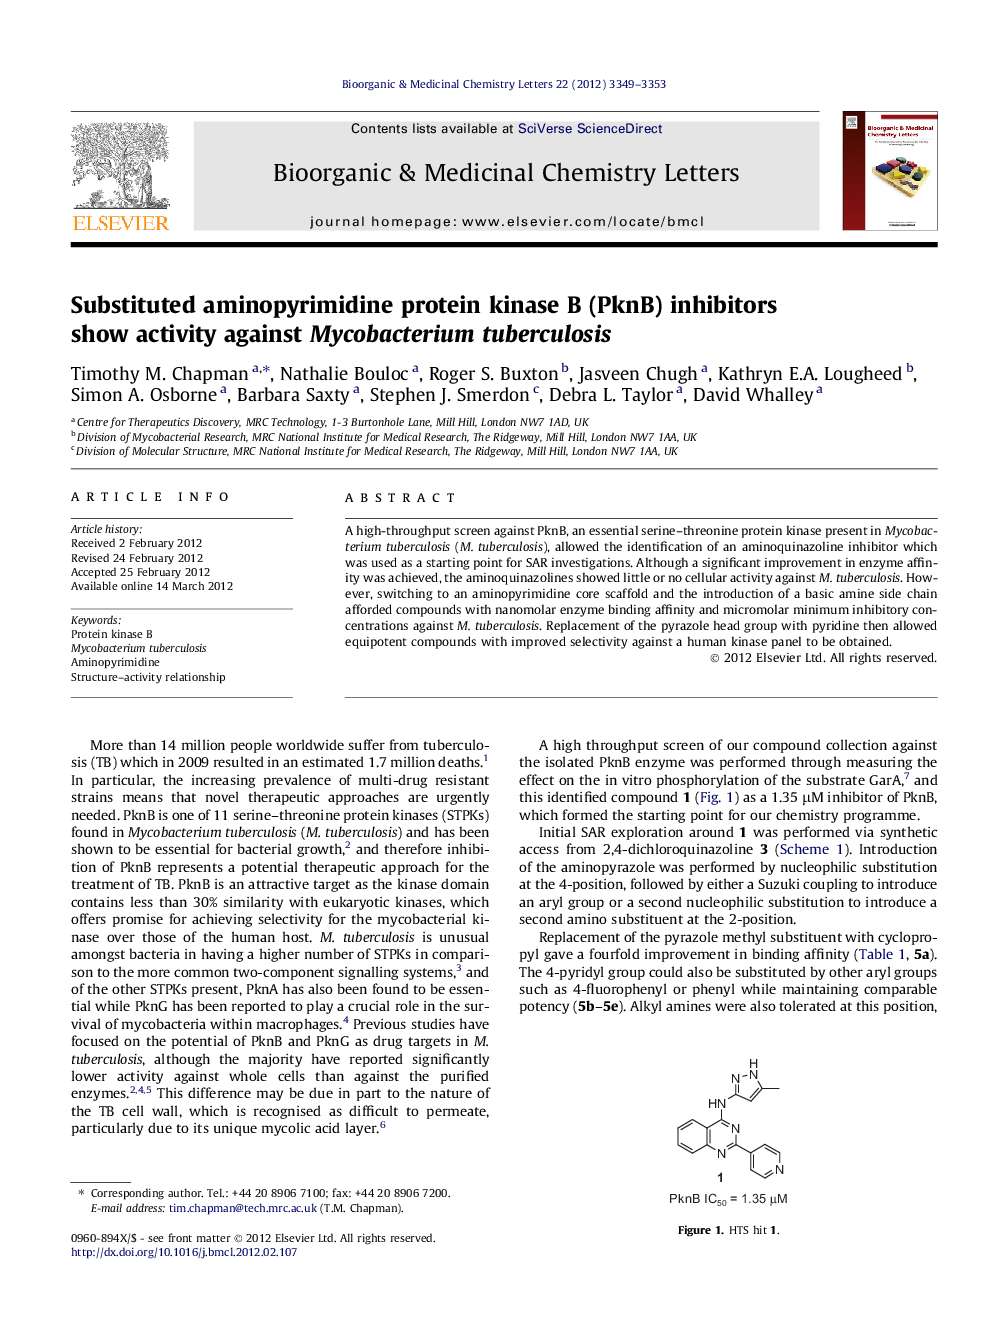 Substituted aminopyrimidine protein kinase B (PknB) inhibitors show activity against Mycobacterium tuberculosis